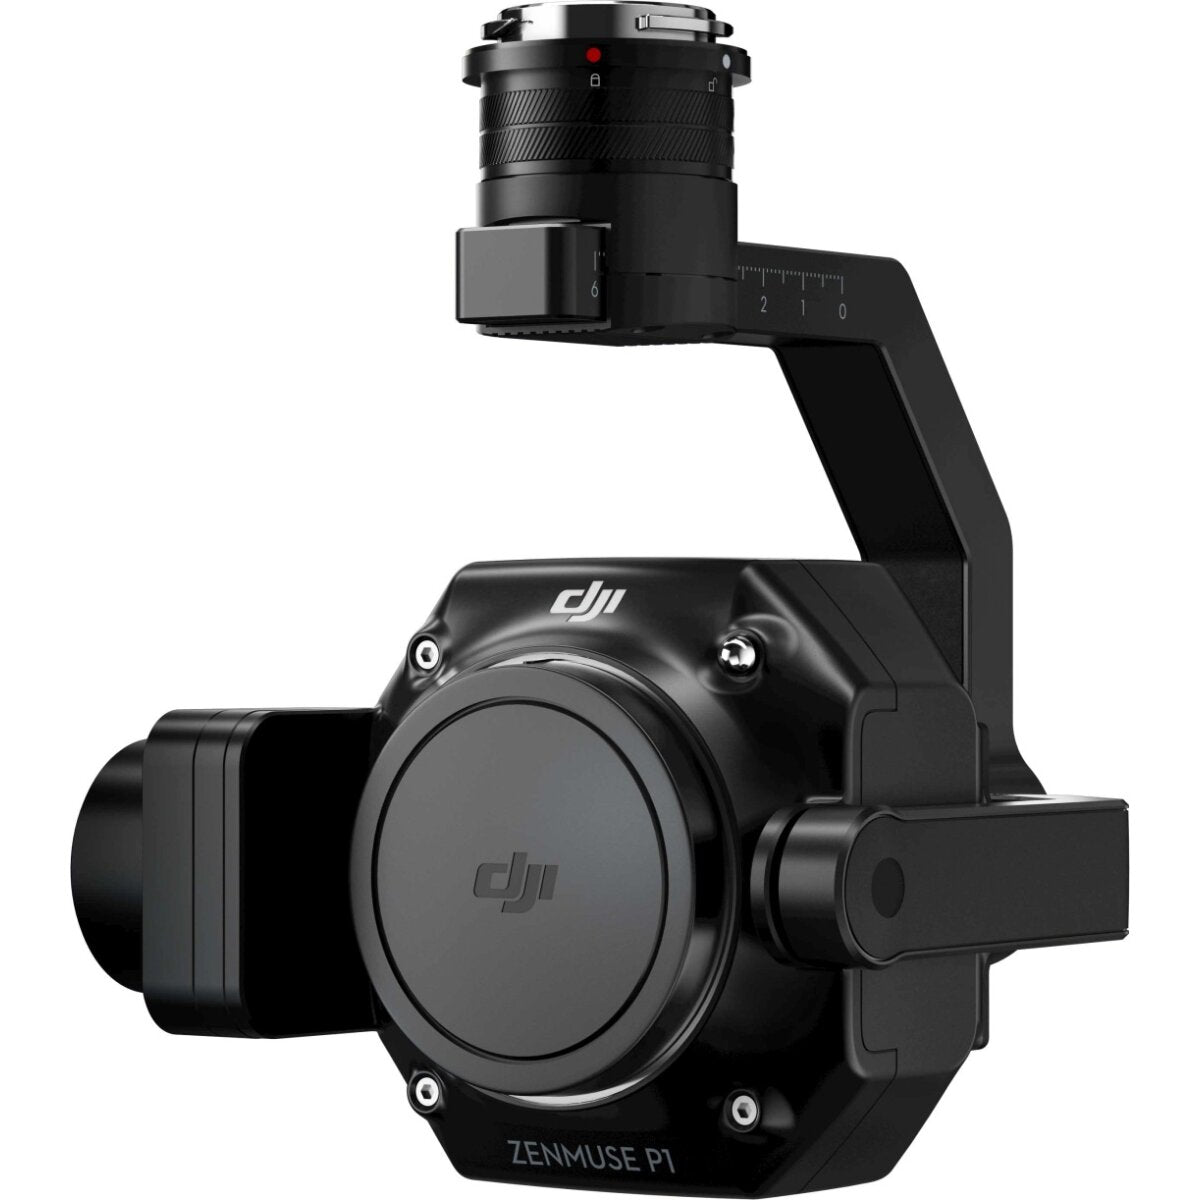 Kamera DJI Zenmuse P1 für Drohne DJI M350 und DJI M300 inkl. 12 Monate Care Enterprise Basic